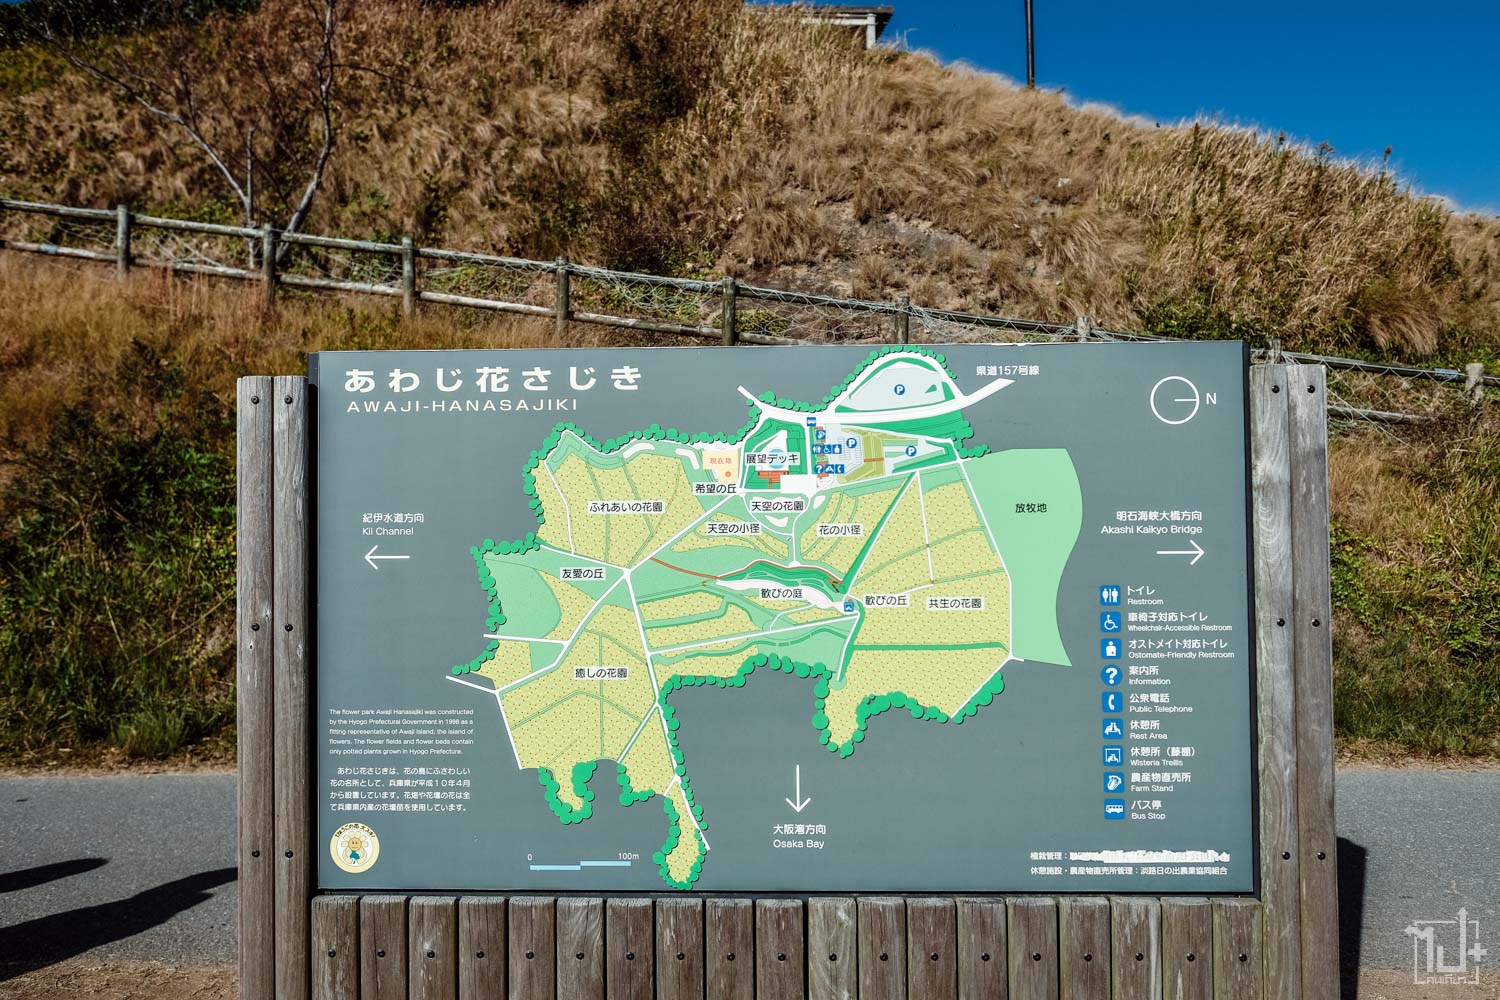 #Okayama #HimejiCastle #BitchuMatuyamaCastle #HomeStay #Kansai #Japan #MaikoMarinePromenade #KojimaJeansStreet #Kobe #HelloKittyShowBox #ShizutaniSchool #สวนไมโกะ #สะพานที่ยาวที่สุดในโลก #โอคายาม่า #คันไซ #ที่เที่ยวโอคายาม่า #นอนโฮมสเตย์ญี่ปุ่น #โฮมสเตย์ญี่ปุ่น #โฮมสเตย์โอคายาม่า #ปราสาทลอยฟ้า #ปราสาทบิจจูมัตสึยามะ #ทะเลหมอก #ทะเลหมอกญี่ปุ่น #จุดชมทะเลหมอกอุนไค #รีวิวญี่ปุ่น #เที่ยวญี่ปุ่น #โคจิมะยีนส์สตรีท #คุราชิคิ #เนื้อโกเบ #ปราสาทฮิเมจิ #โรงเรียนเก่าชิซึทานิ